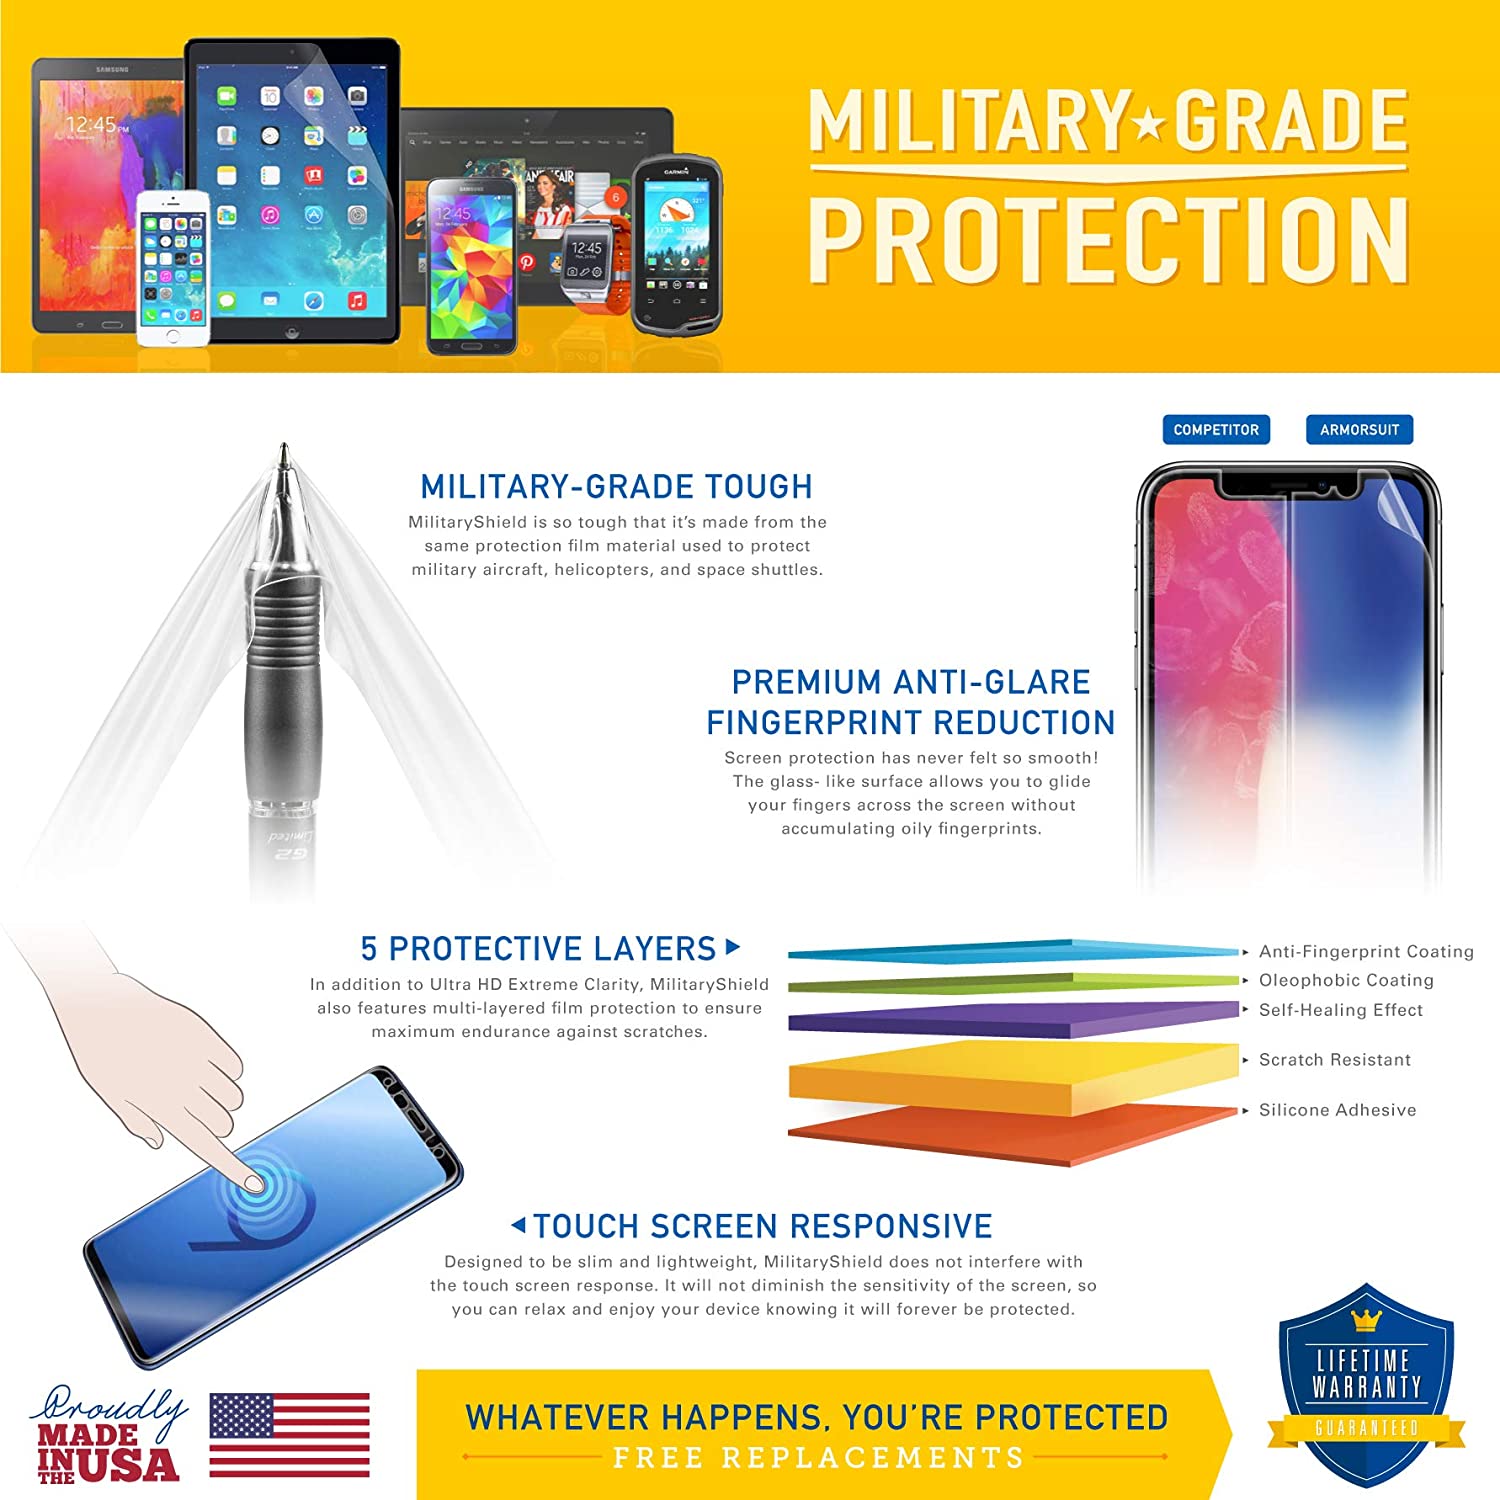 Samsung Galaxy Tab 10.1 Screen Protector + White Carbon Fiber Skin Protector